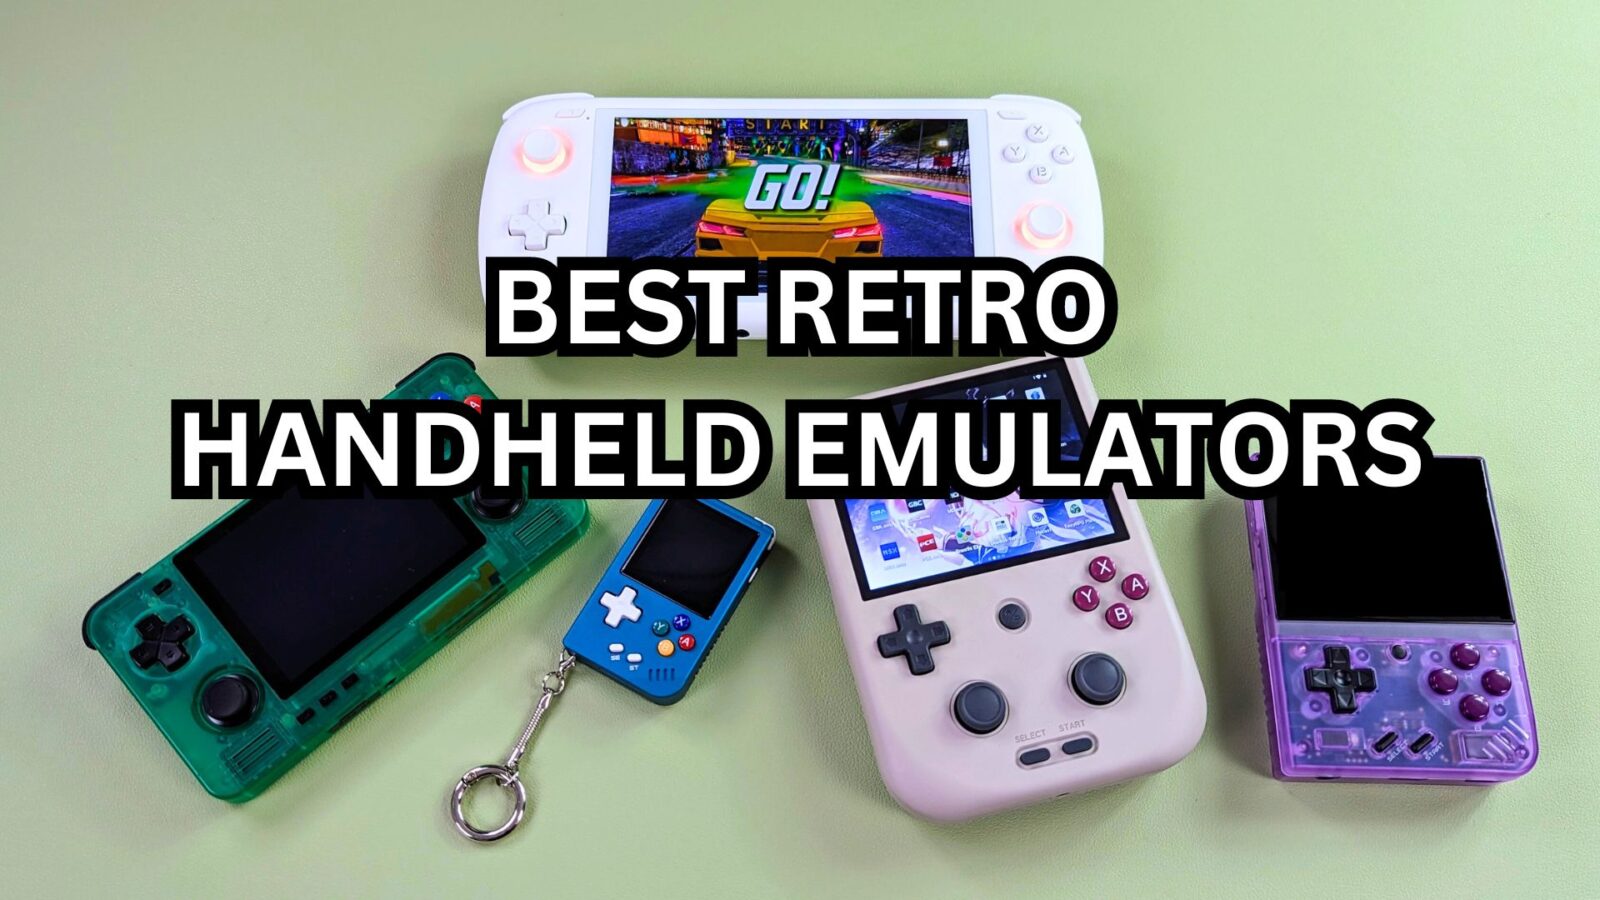 The Best Retro Handheld Emulators